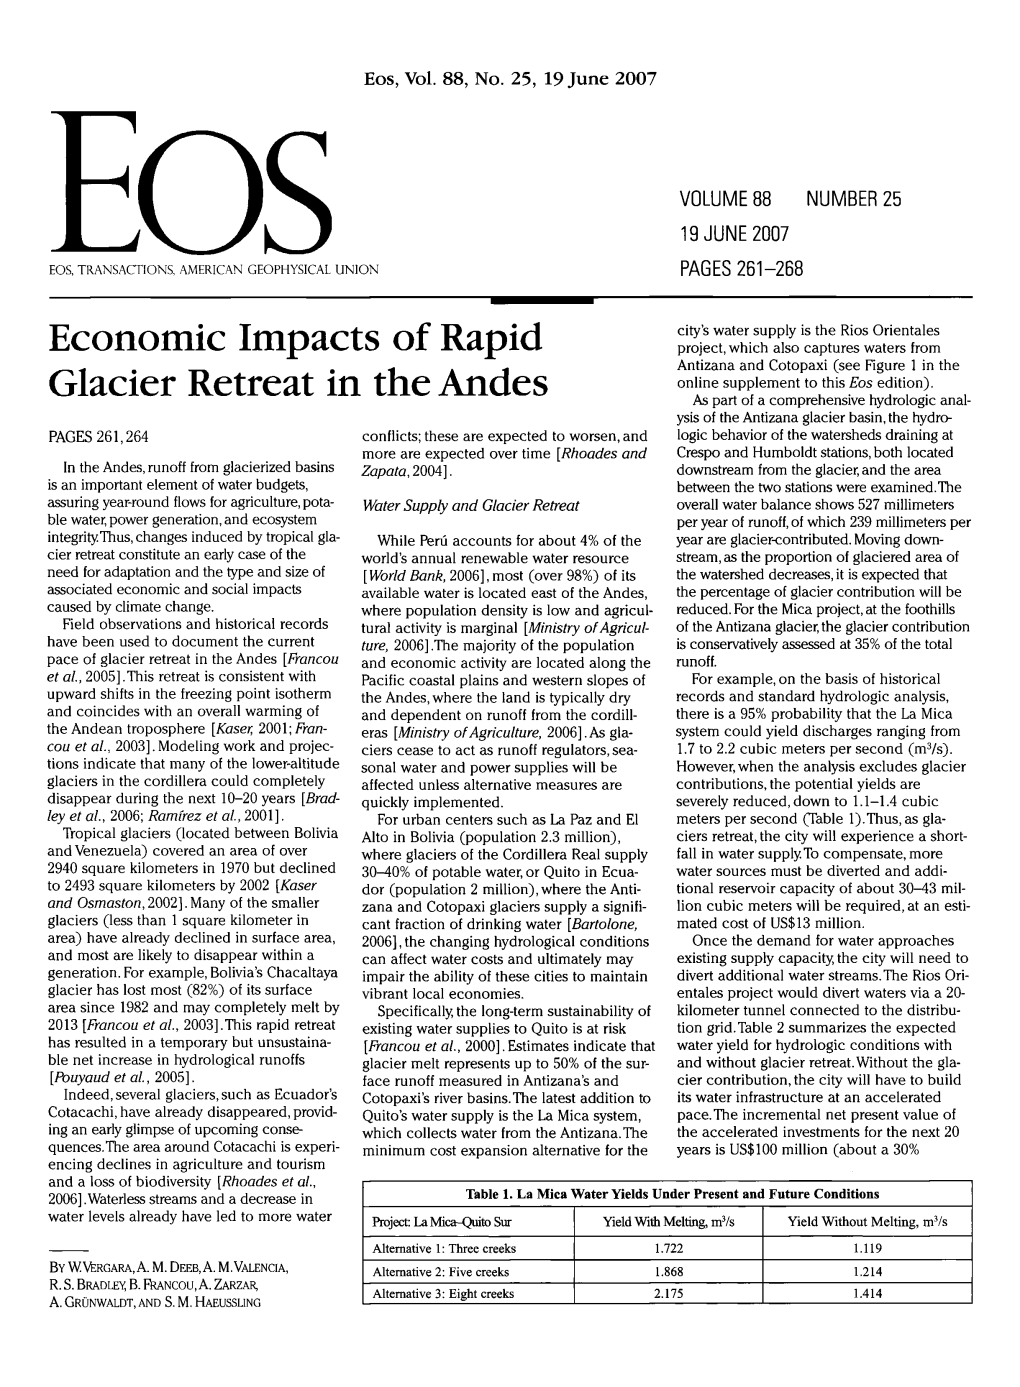 Economic Impacts of Rapid Glacier Retreat in the Andes